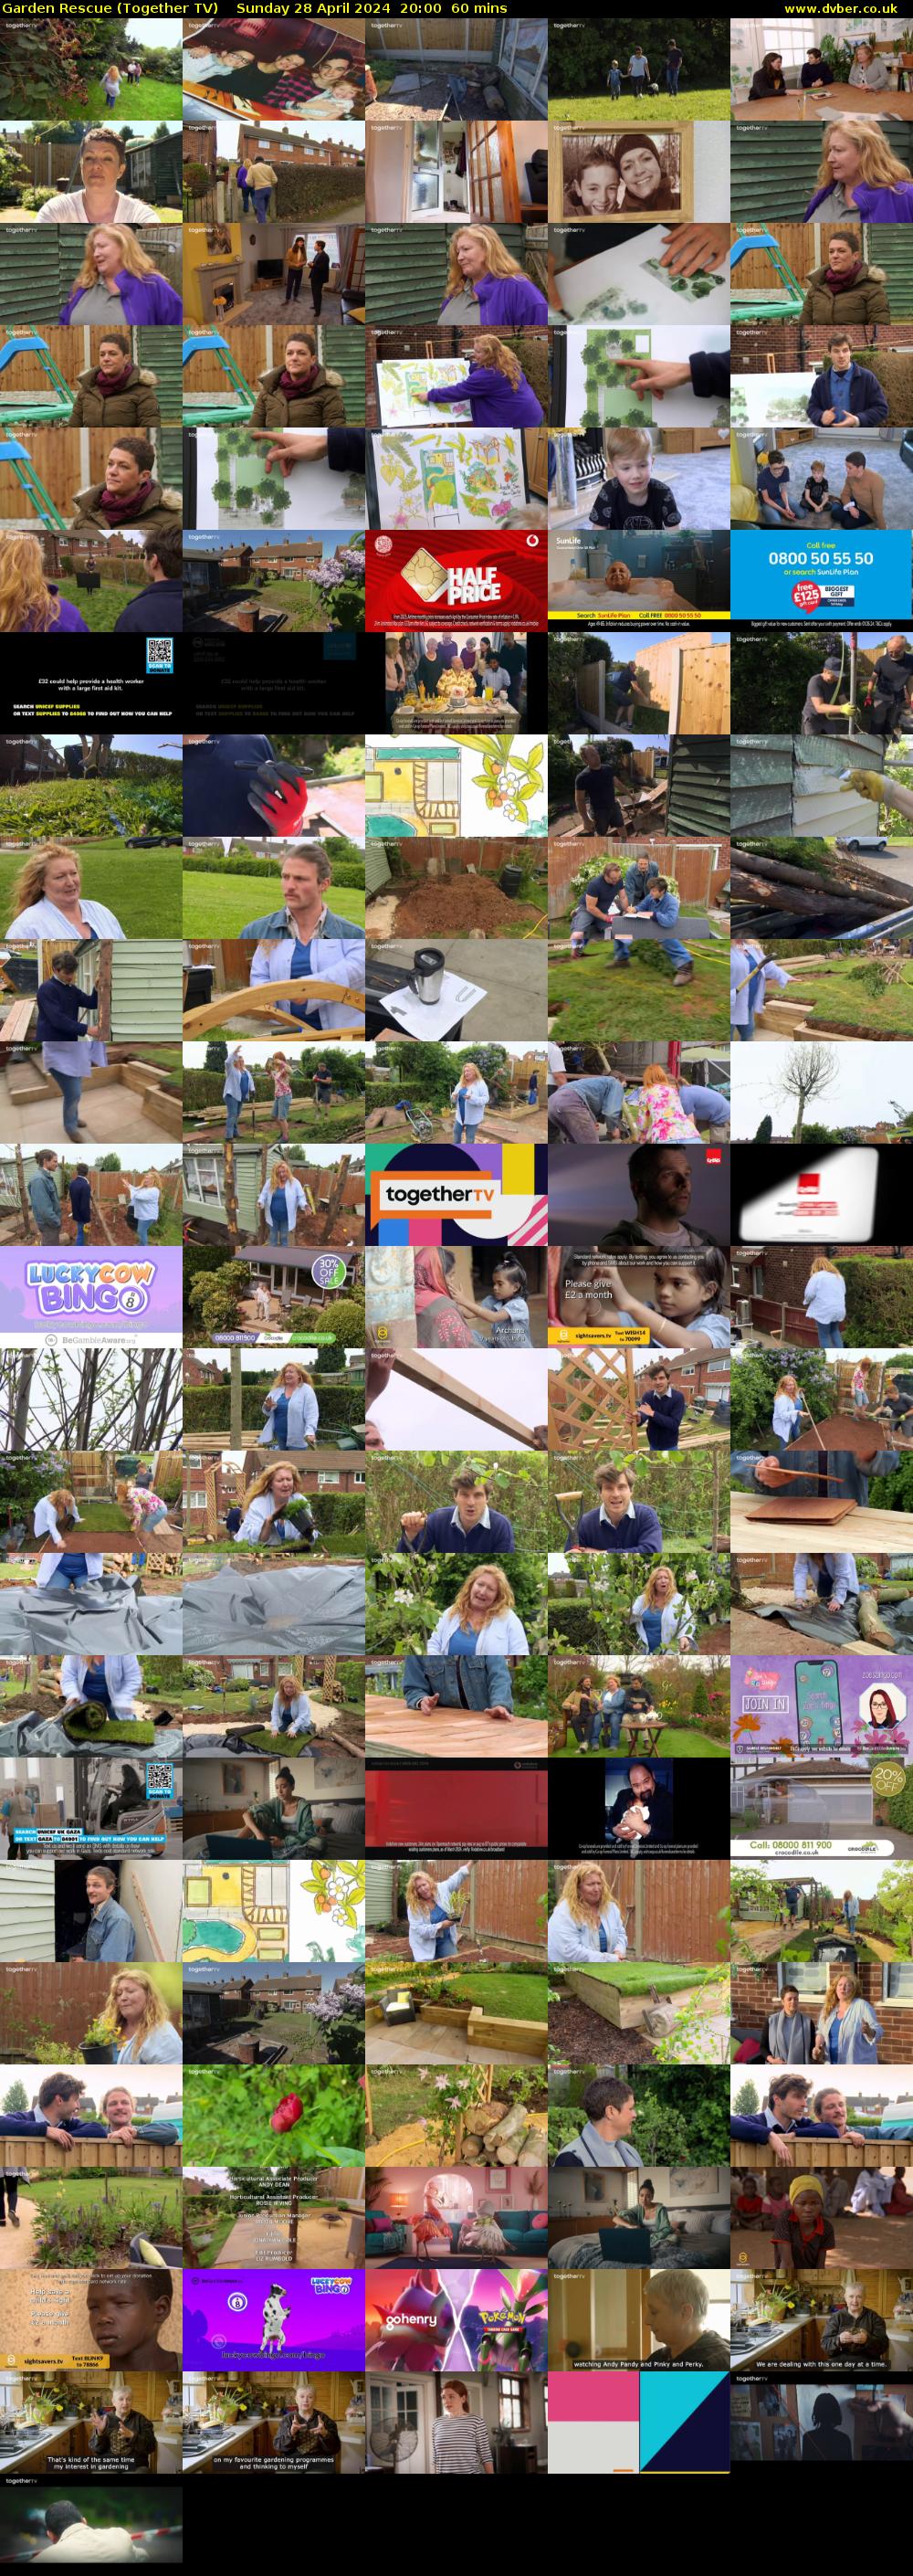 Garden Rescue (Together TV) Sunday 28 April 2024 20:00 - 21:00